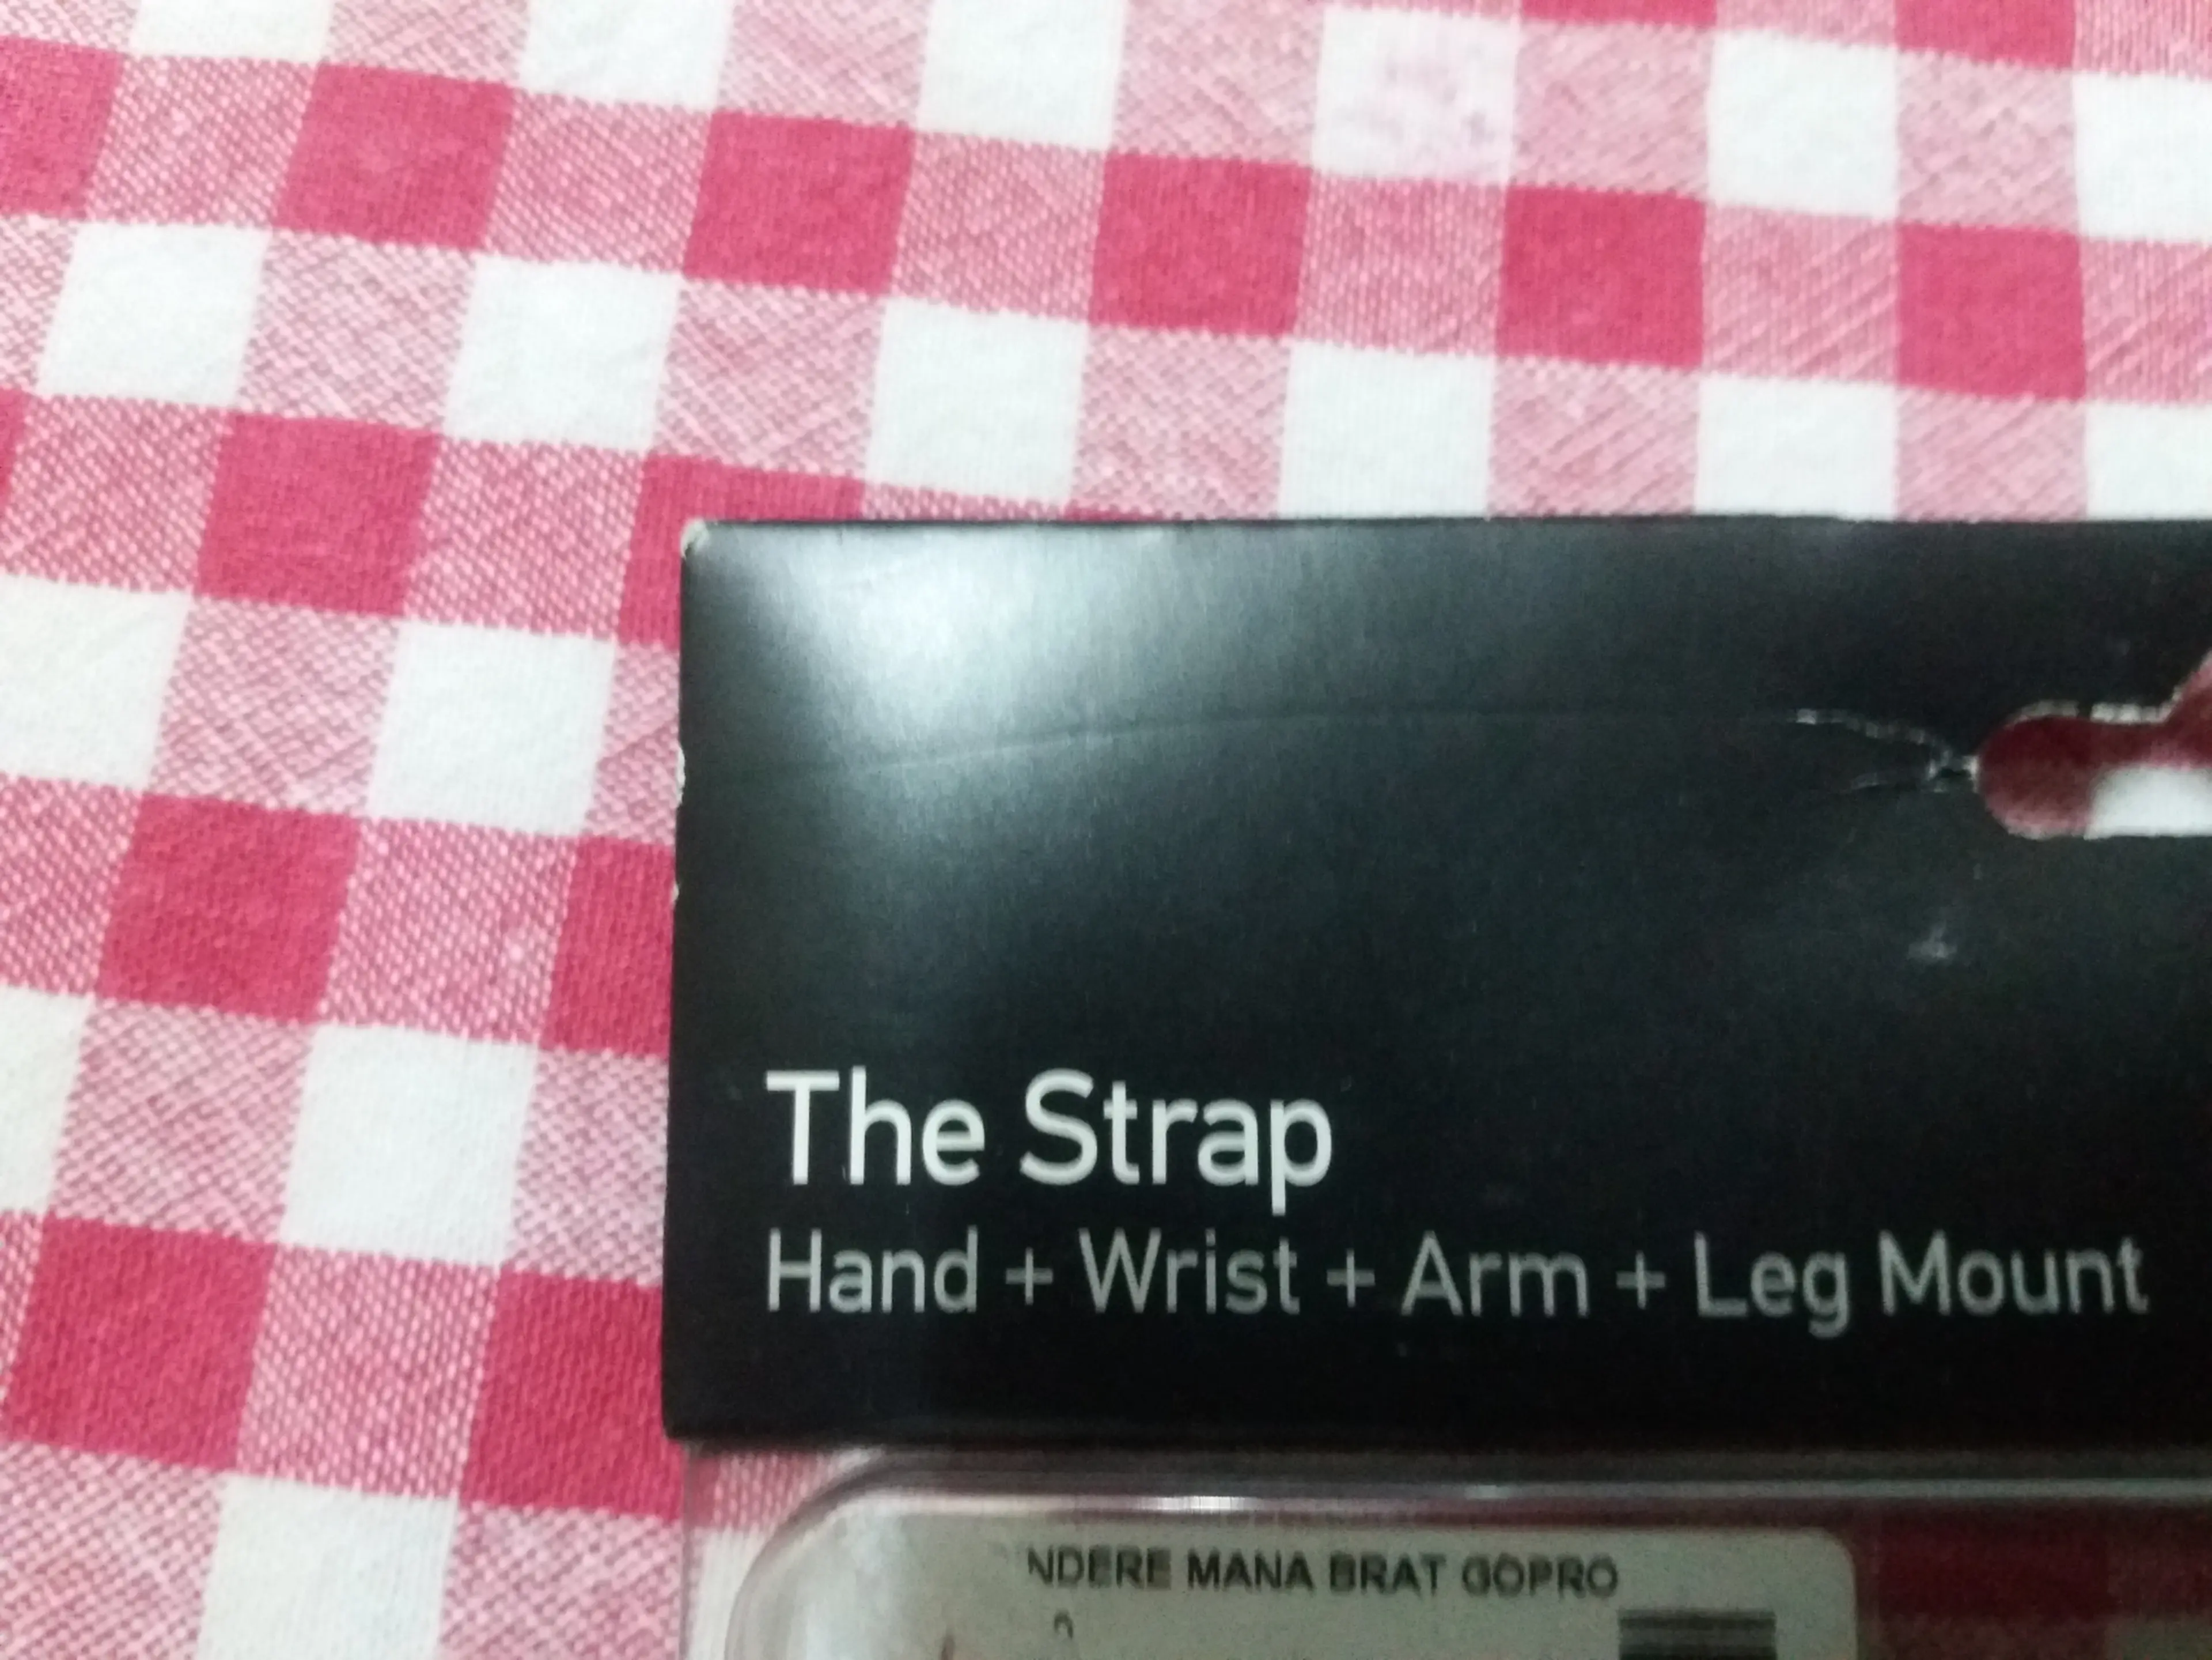 Image GoPro - The Strap Hand+Wrist+Arm+Leg Mount - bratara mana/picior 360°